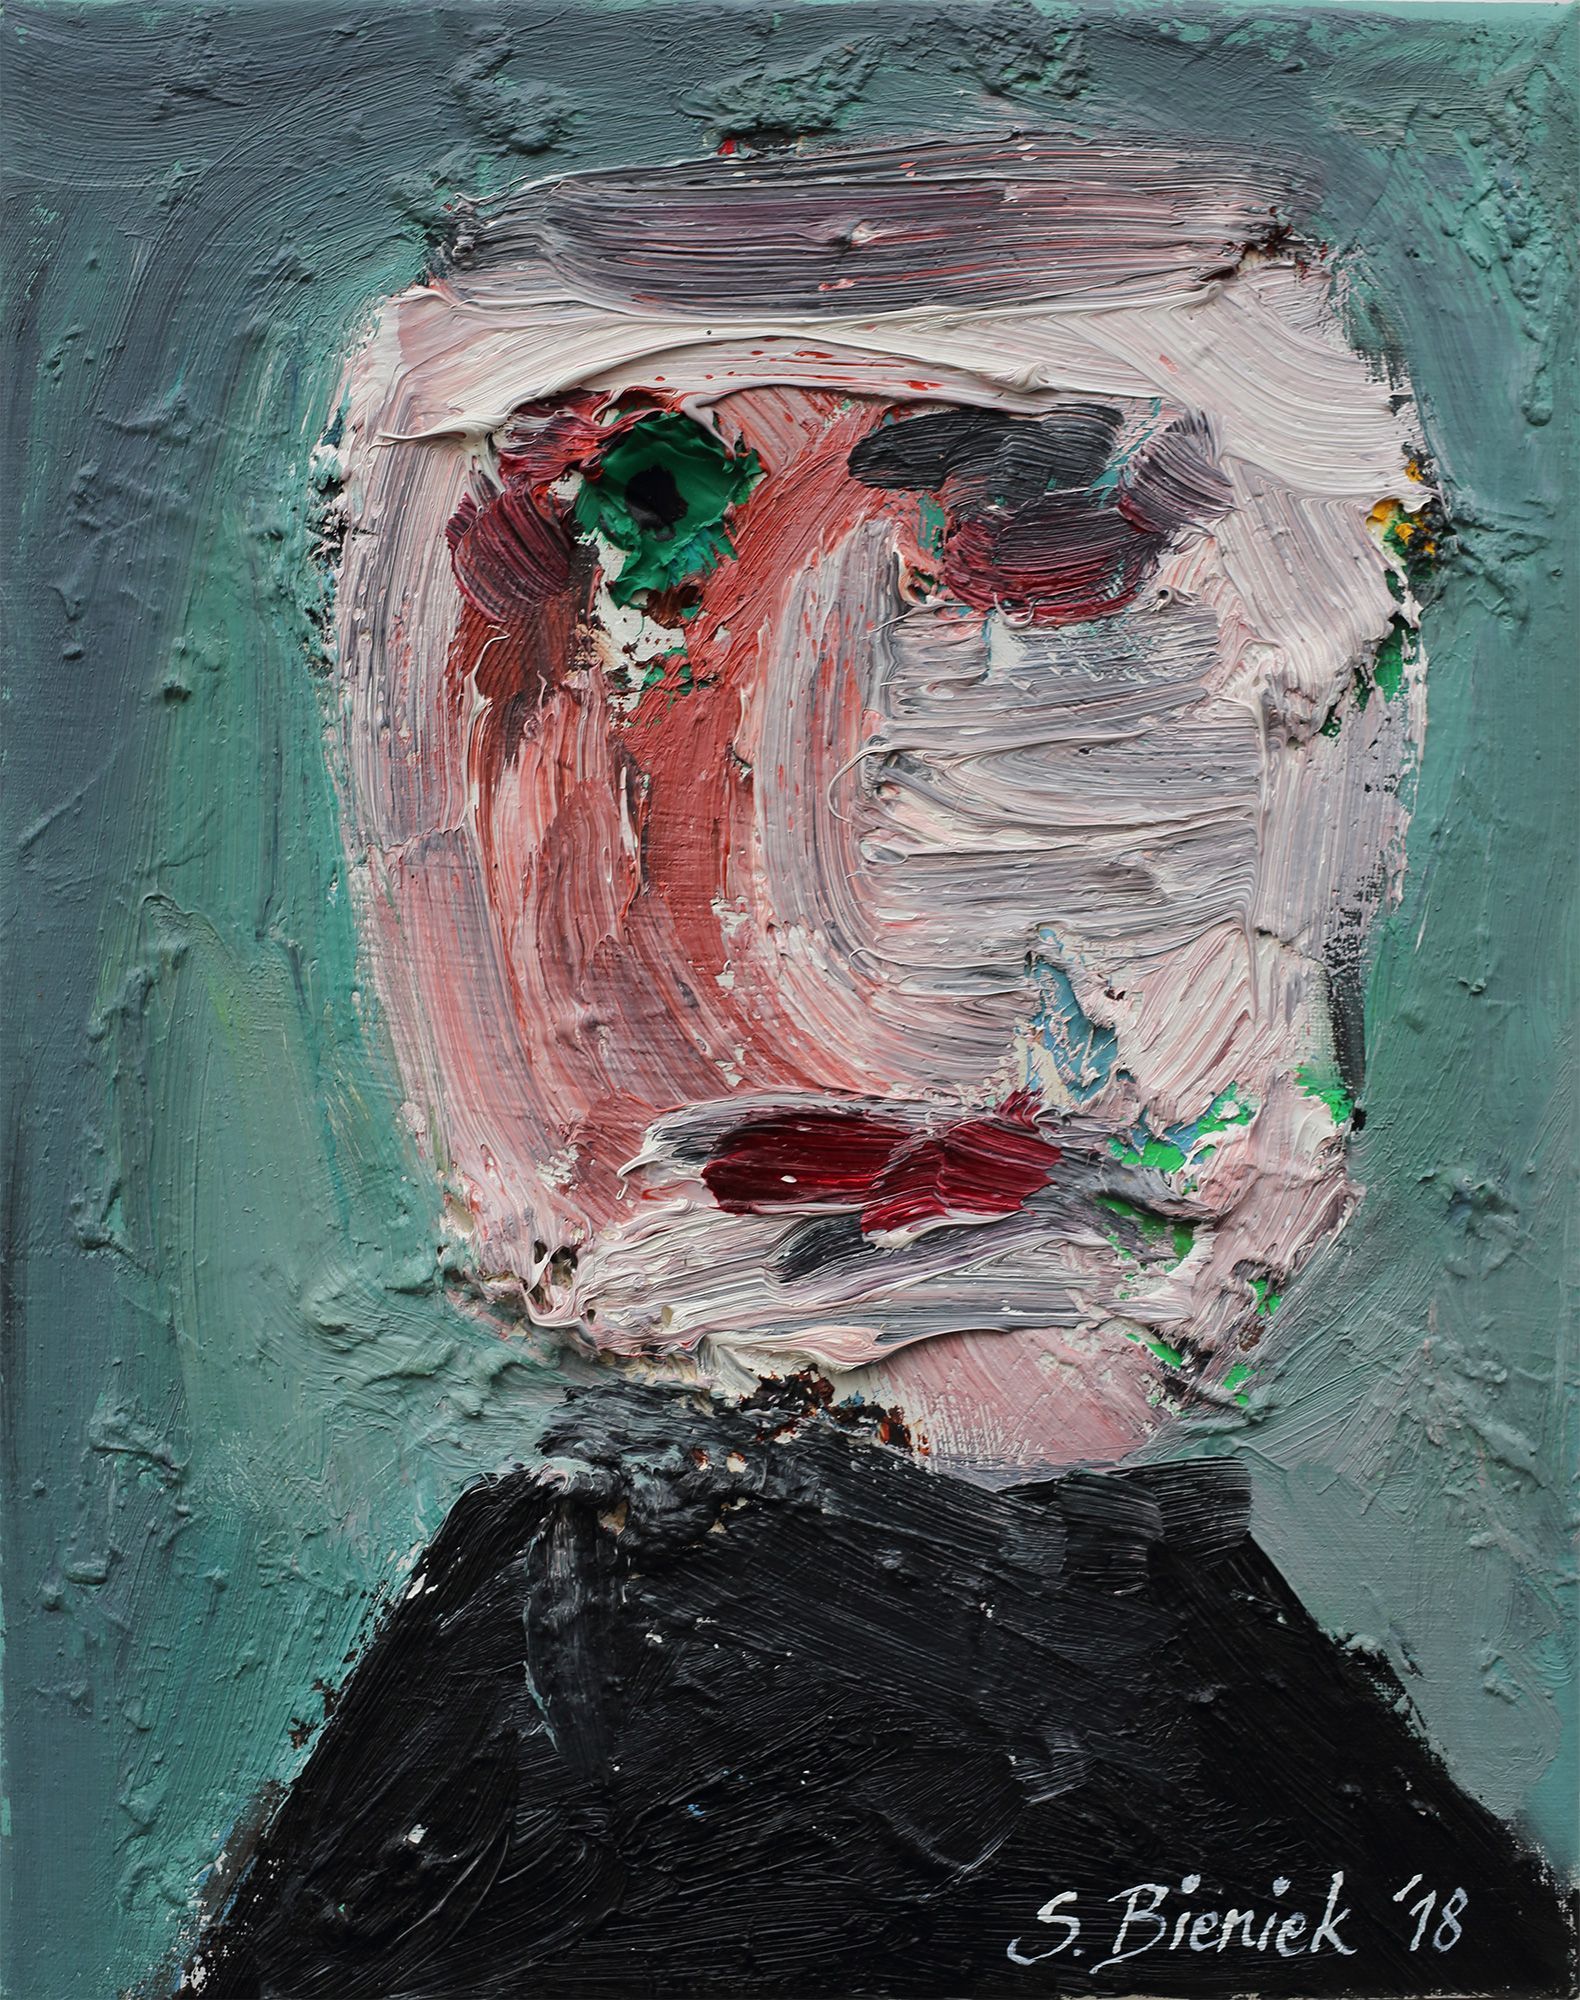 „Face no. 12“, by Sebastian Bieniek (B1EN1EK), 2018. Oil on canvas. 30 x 24 cm. From the 